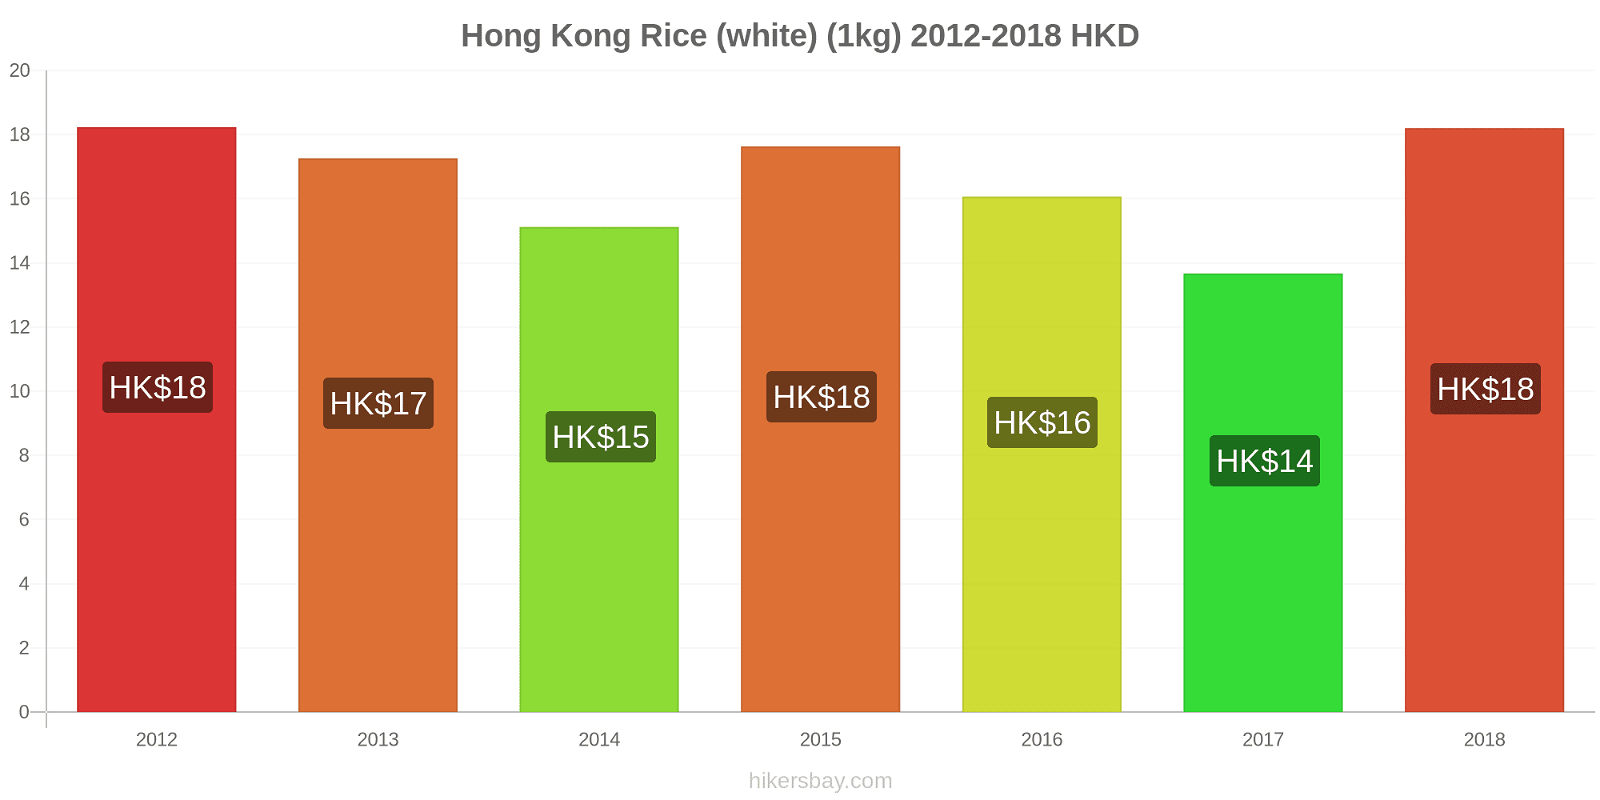 Hong Kong price changes Kilo of white rice hikersbay.com